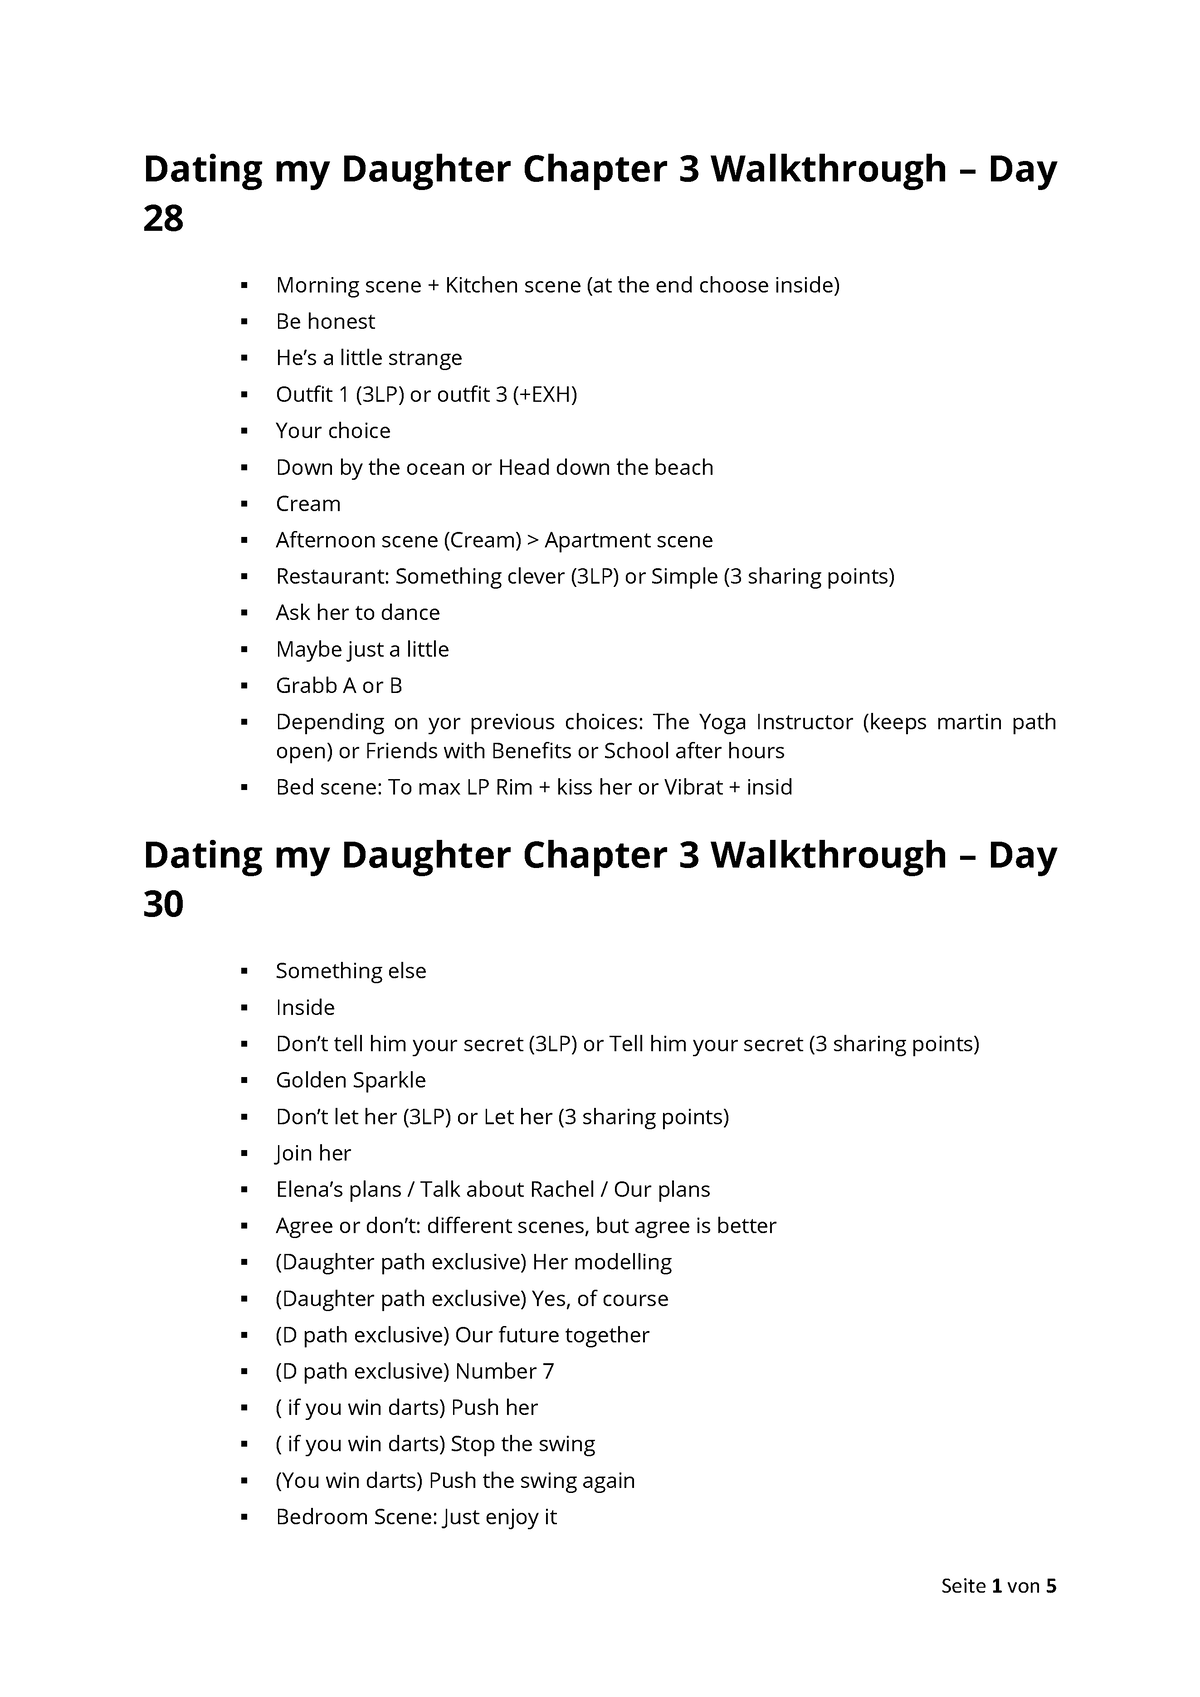 dmd-walkthrough-ch3-sdfgdhfhjhkg-dating-my-daughter-chapter-3-walkthrough-day-28-morning